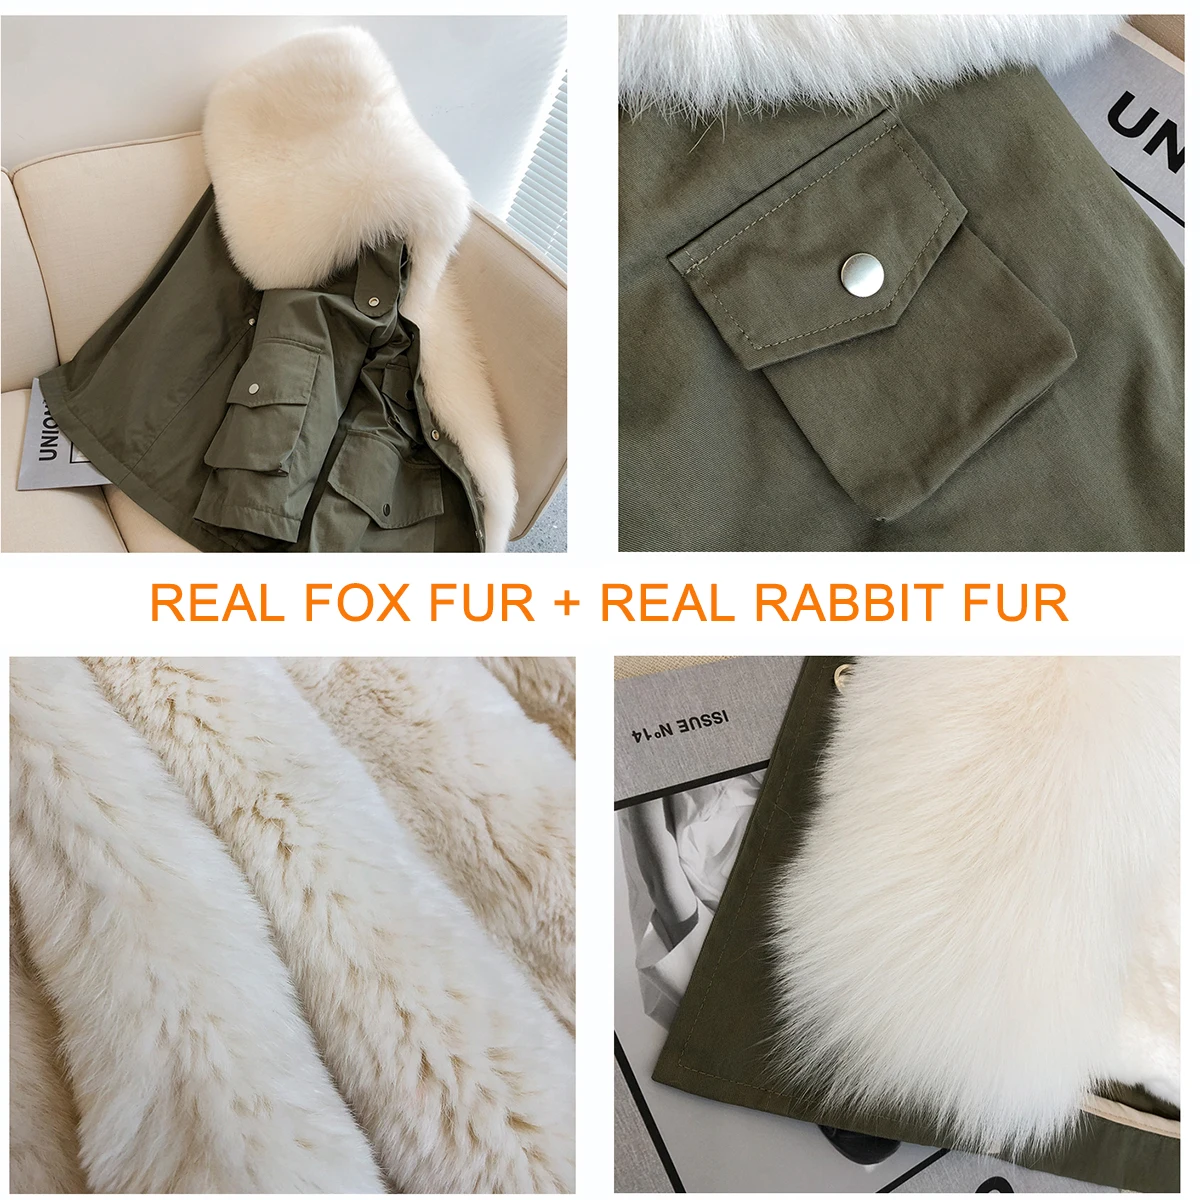 JAZZEVAR 2019 New High Fashion street Women Luxurious fox Fur Parka Ladies detachable Real Fur rabbit lining Coat winter jacket enlarge